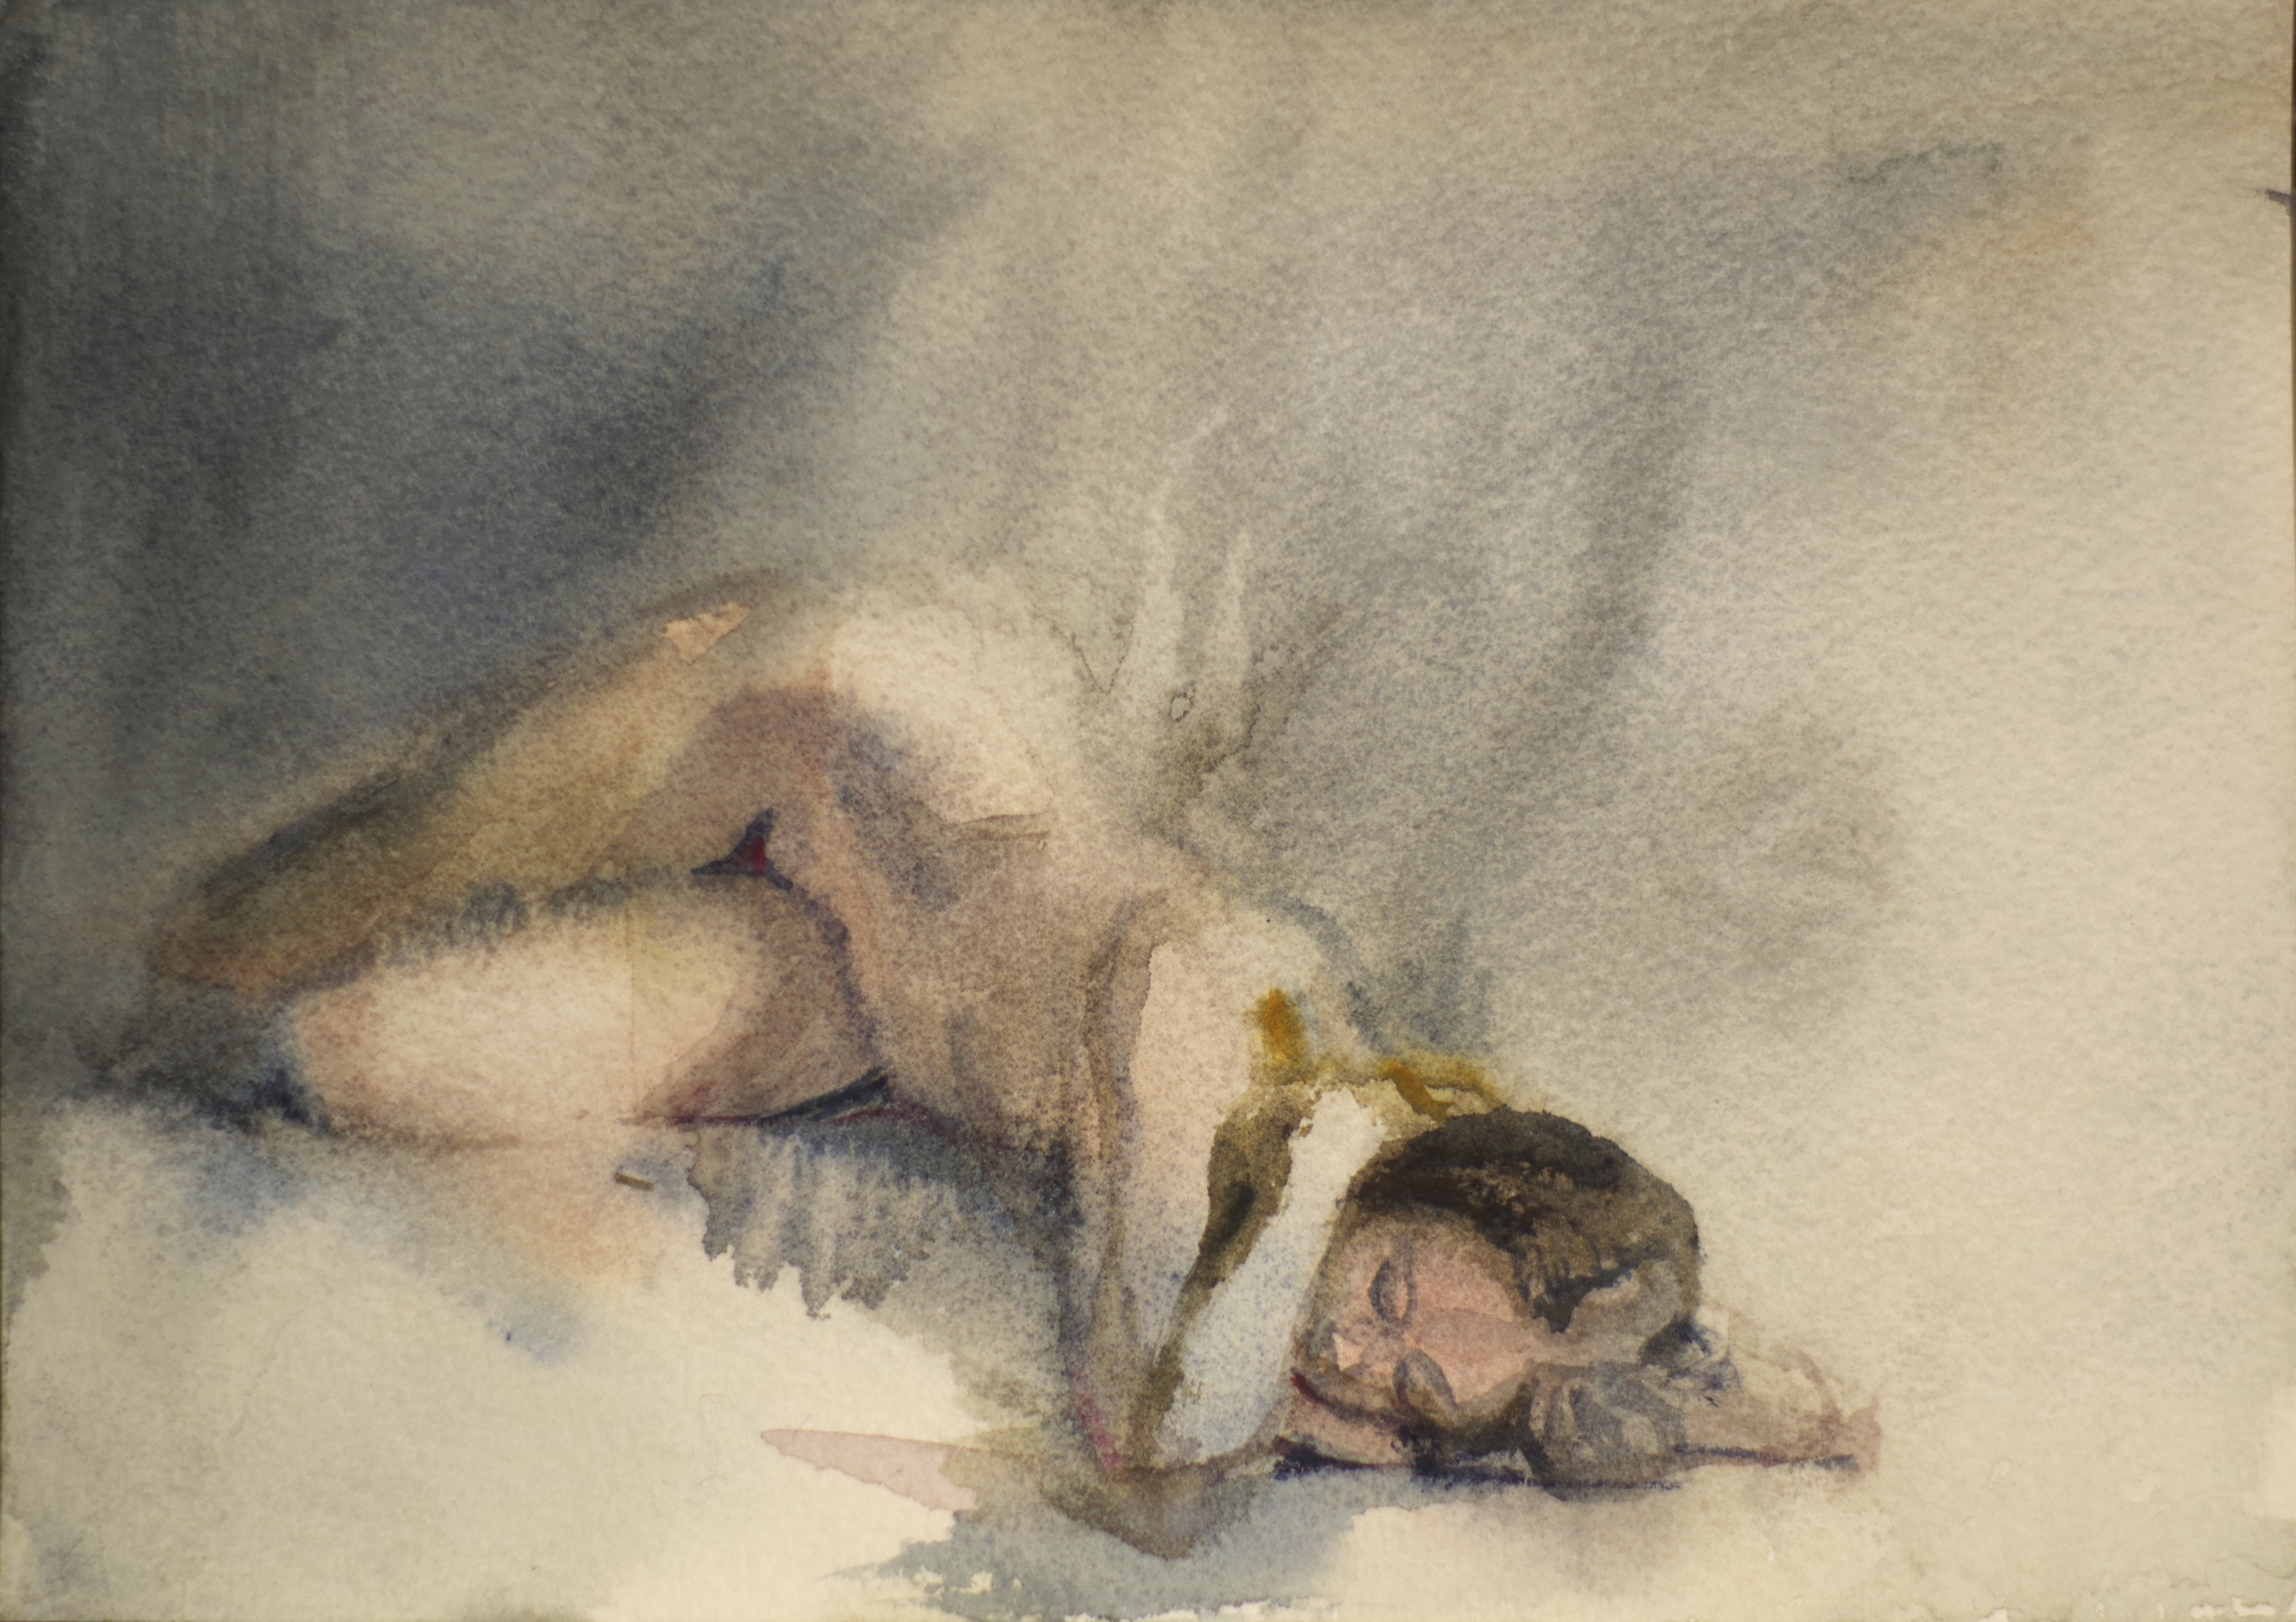 Sleeping (watercolor, 15x20)